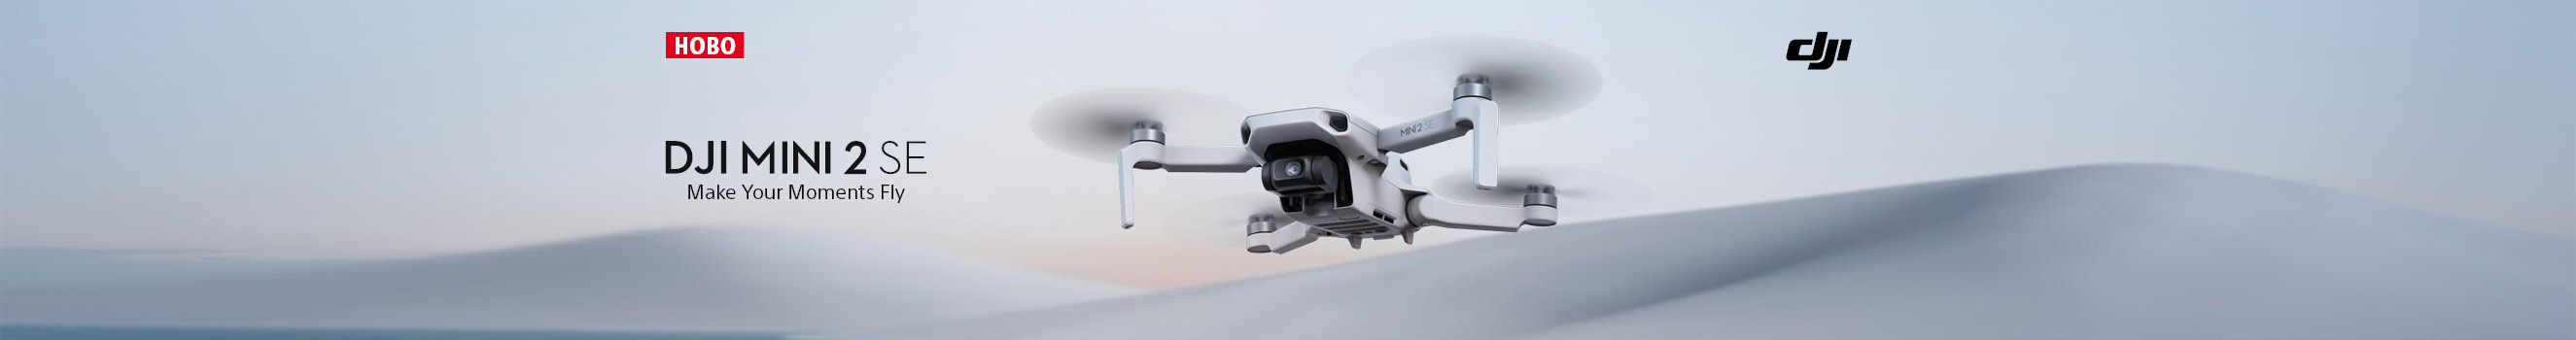  The new drone DJI Mini 2 SE